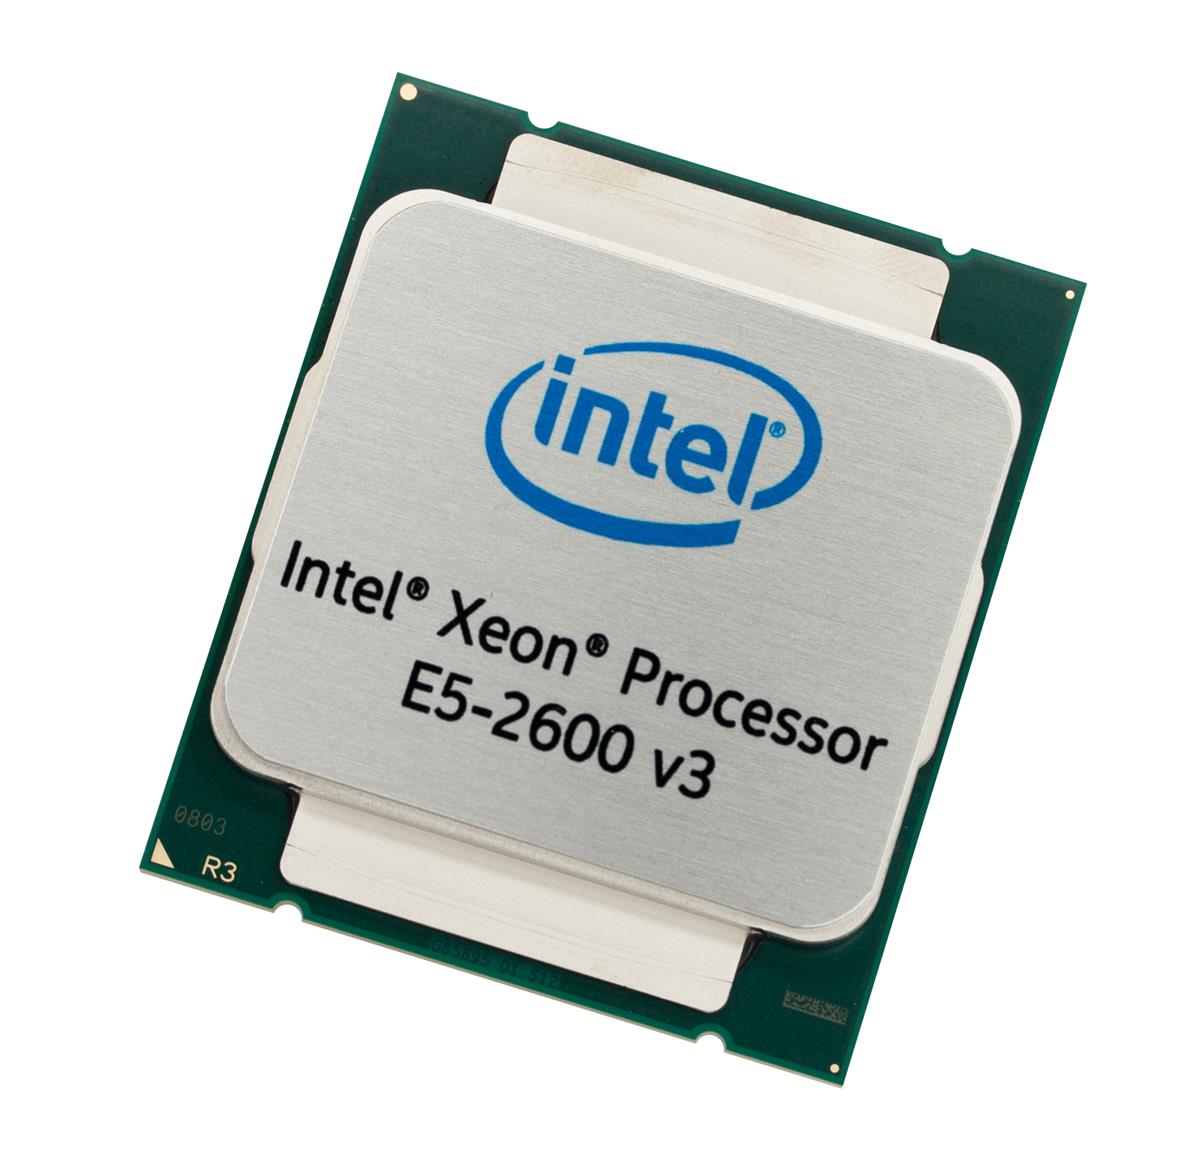 E5-2603v3 Intel Xeon E5-2603 v3 6 Core 1.60GHz 6.40GT/s QPI 15MB L3 Cache Processor